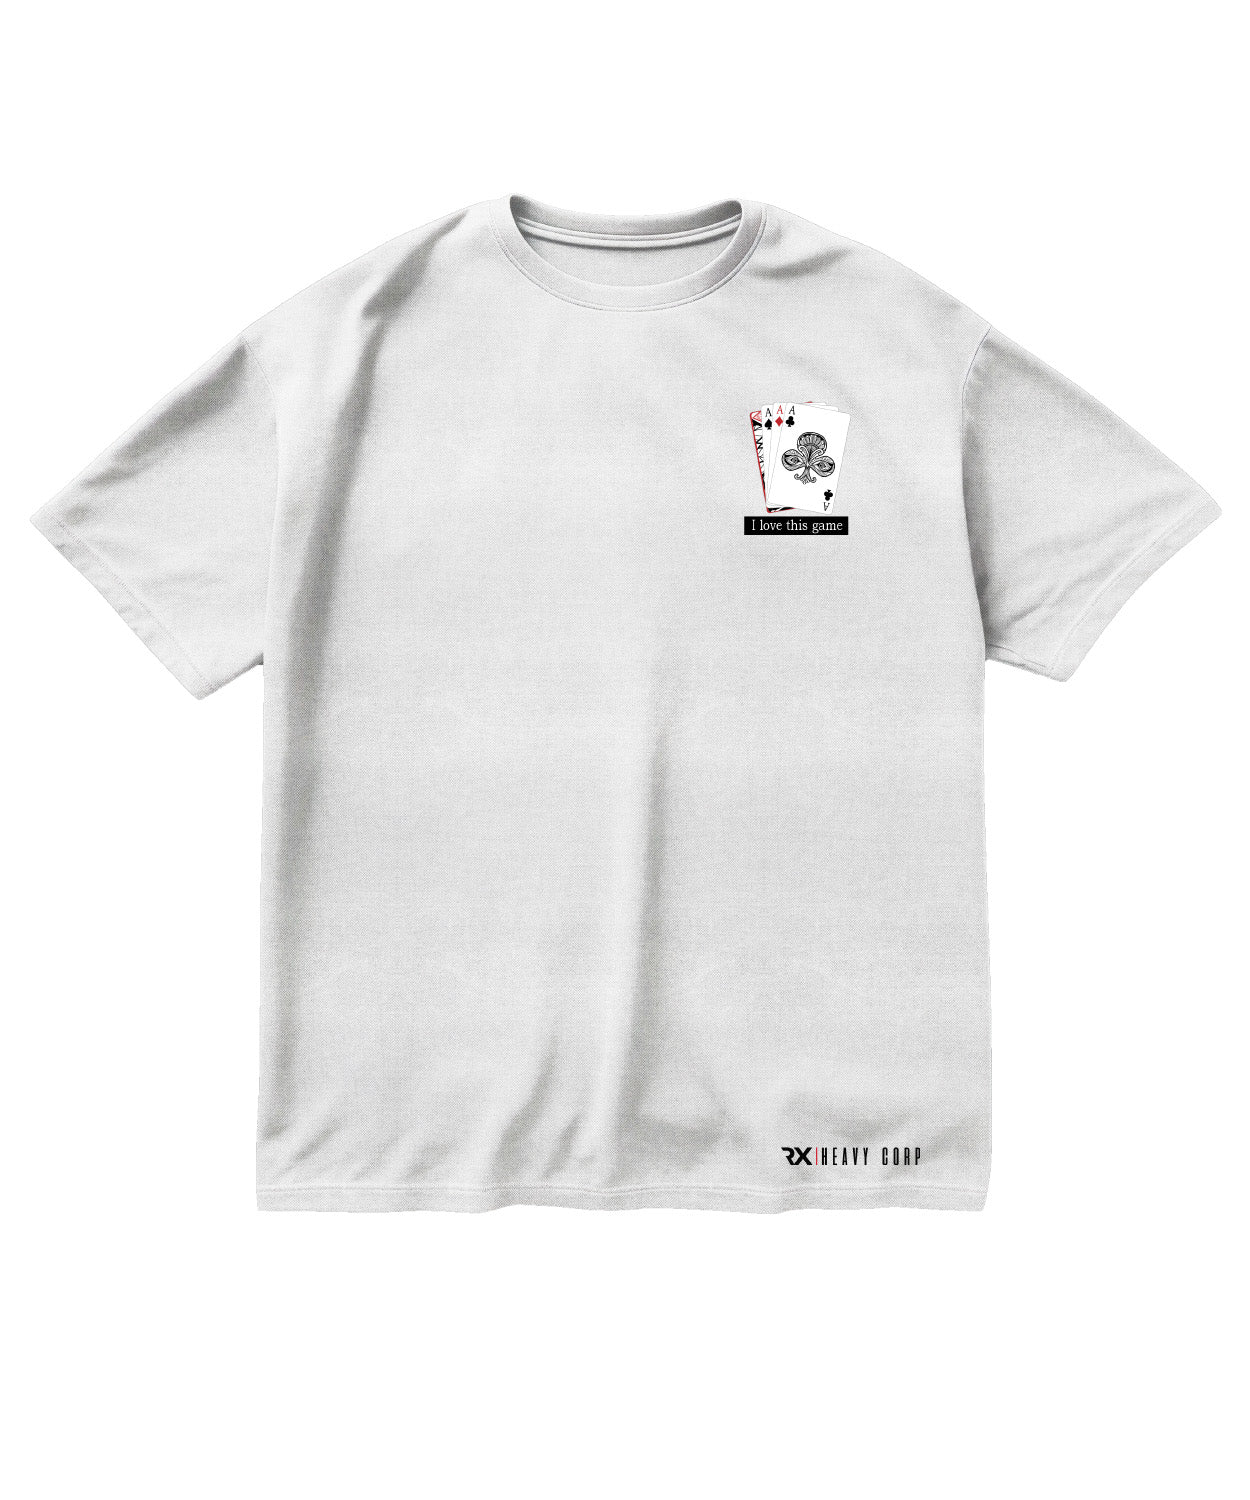 Camiseta Oversize algodón 100% - AS love this game - blanca